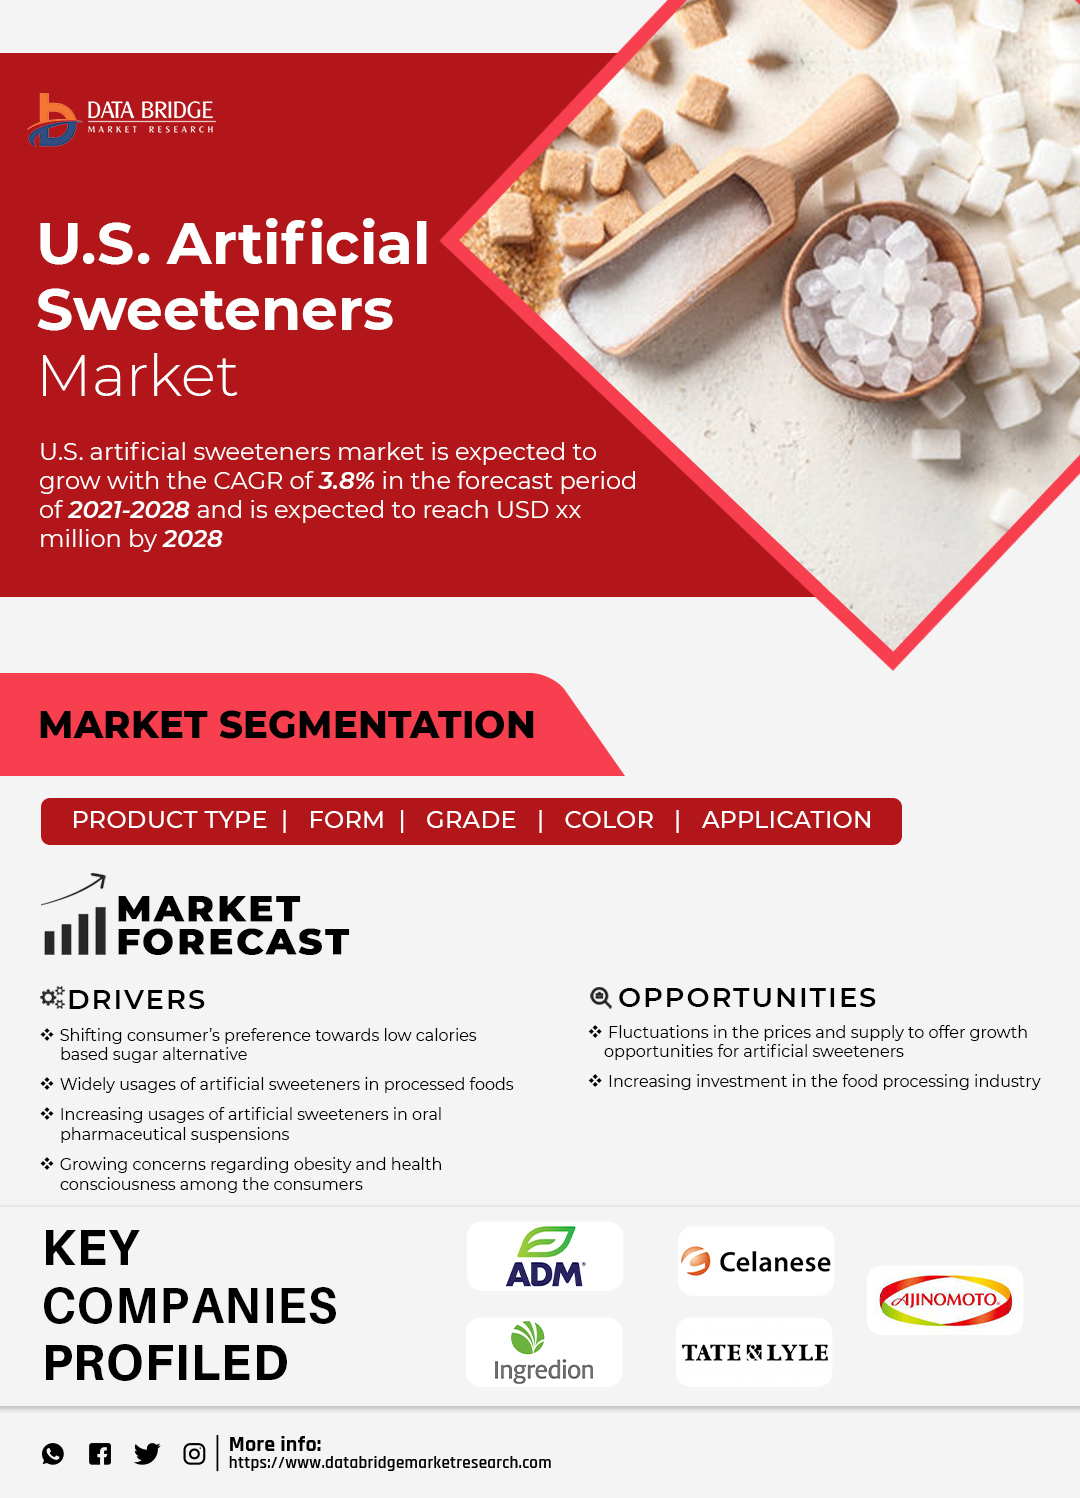 U.S. Artificial Sweeteners Market